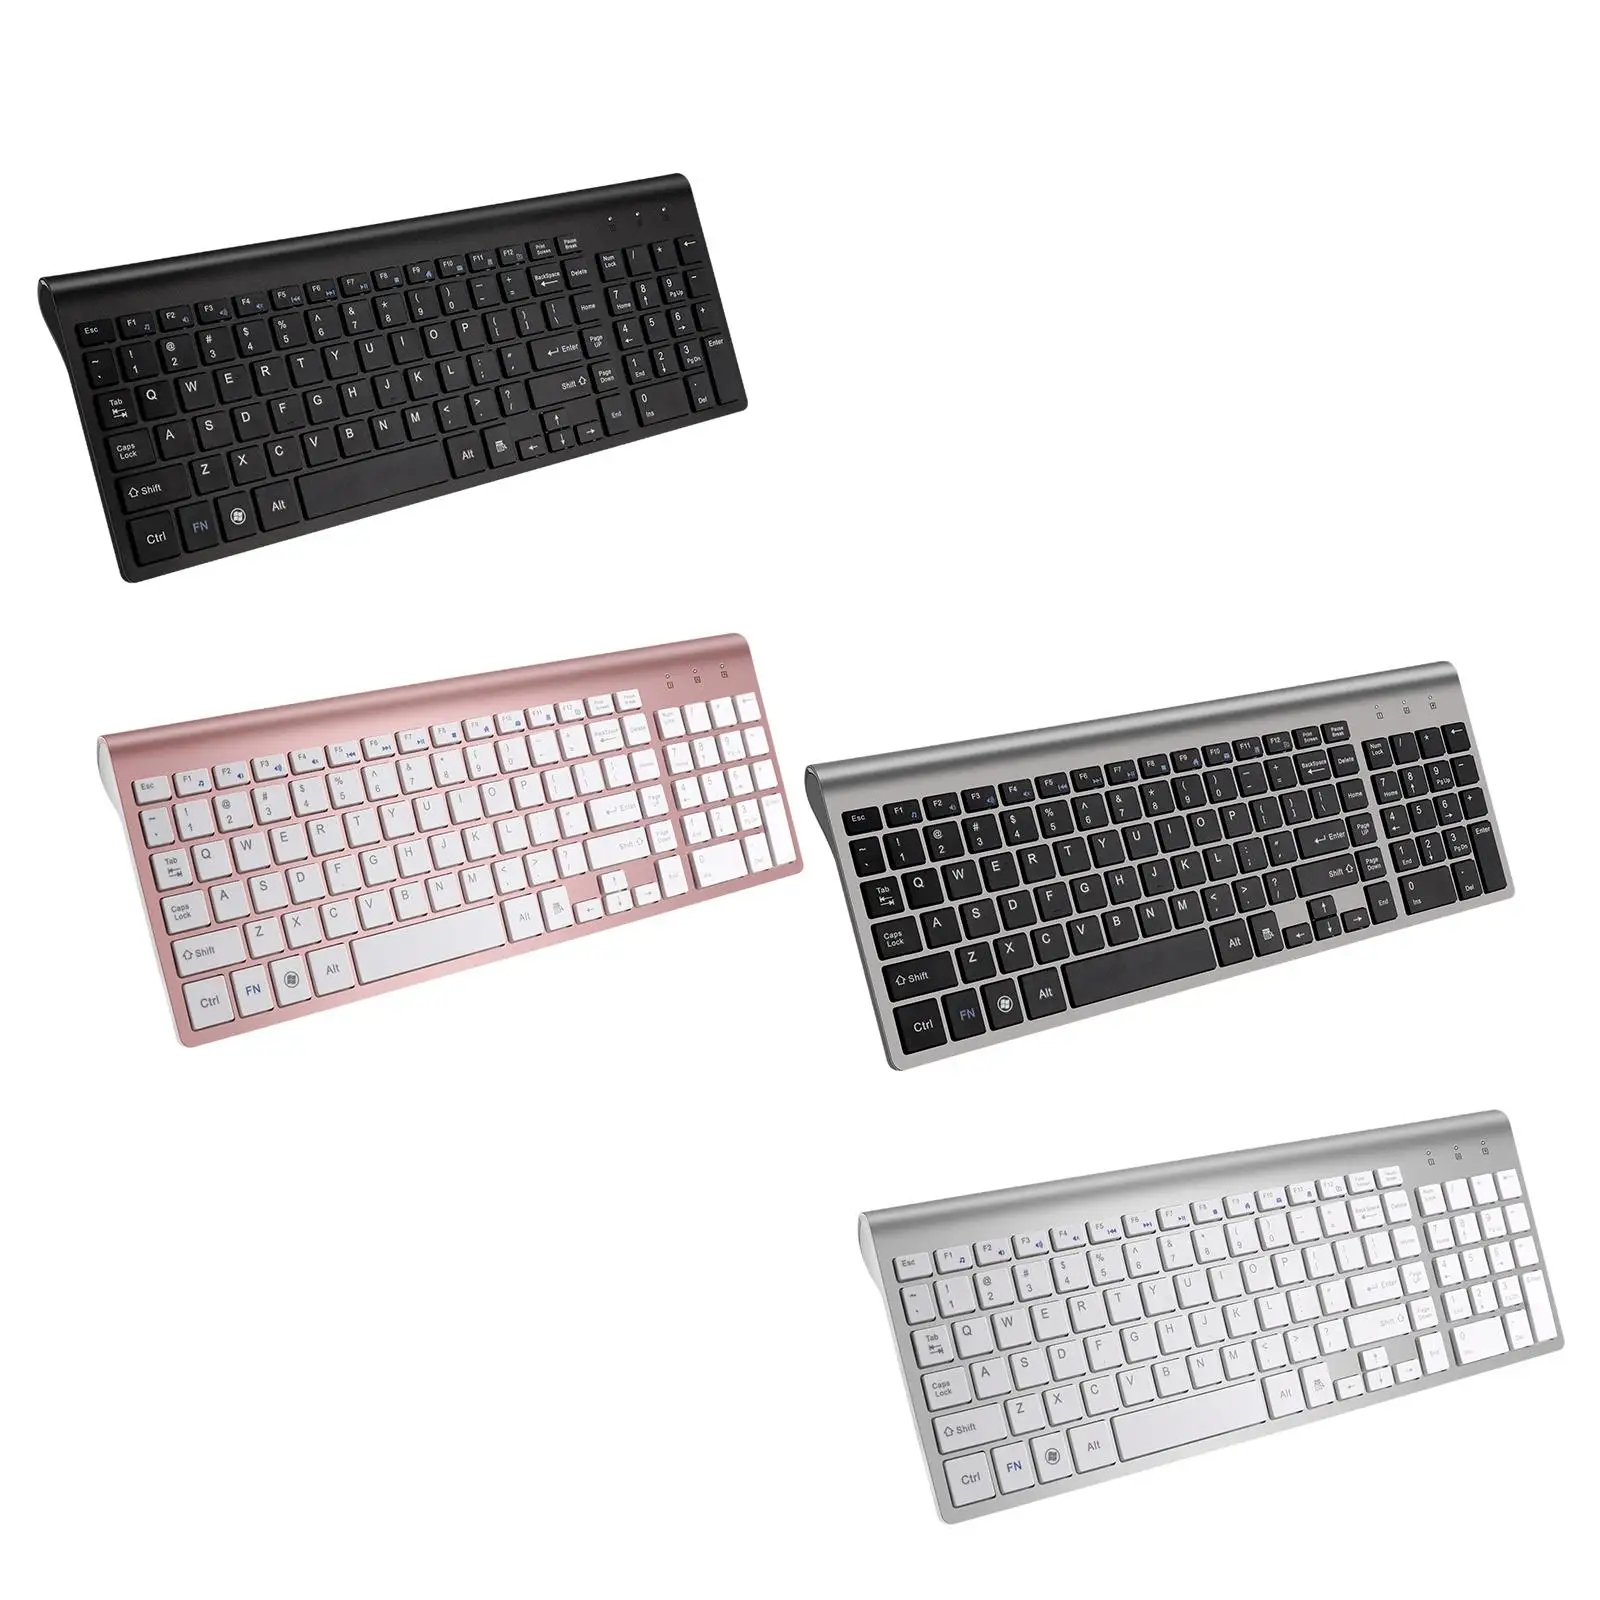 Thin   Keyboard Mute USB Port Numeric Keypad for Laptops and Desktops, Responsive and  Noise Ergonomic